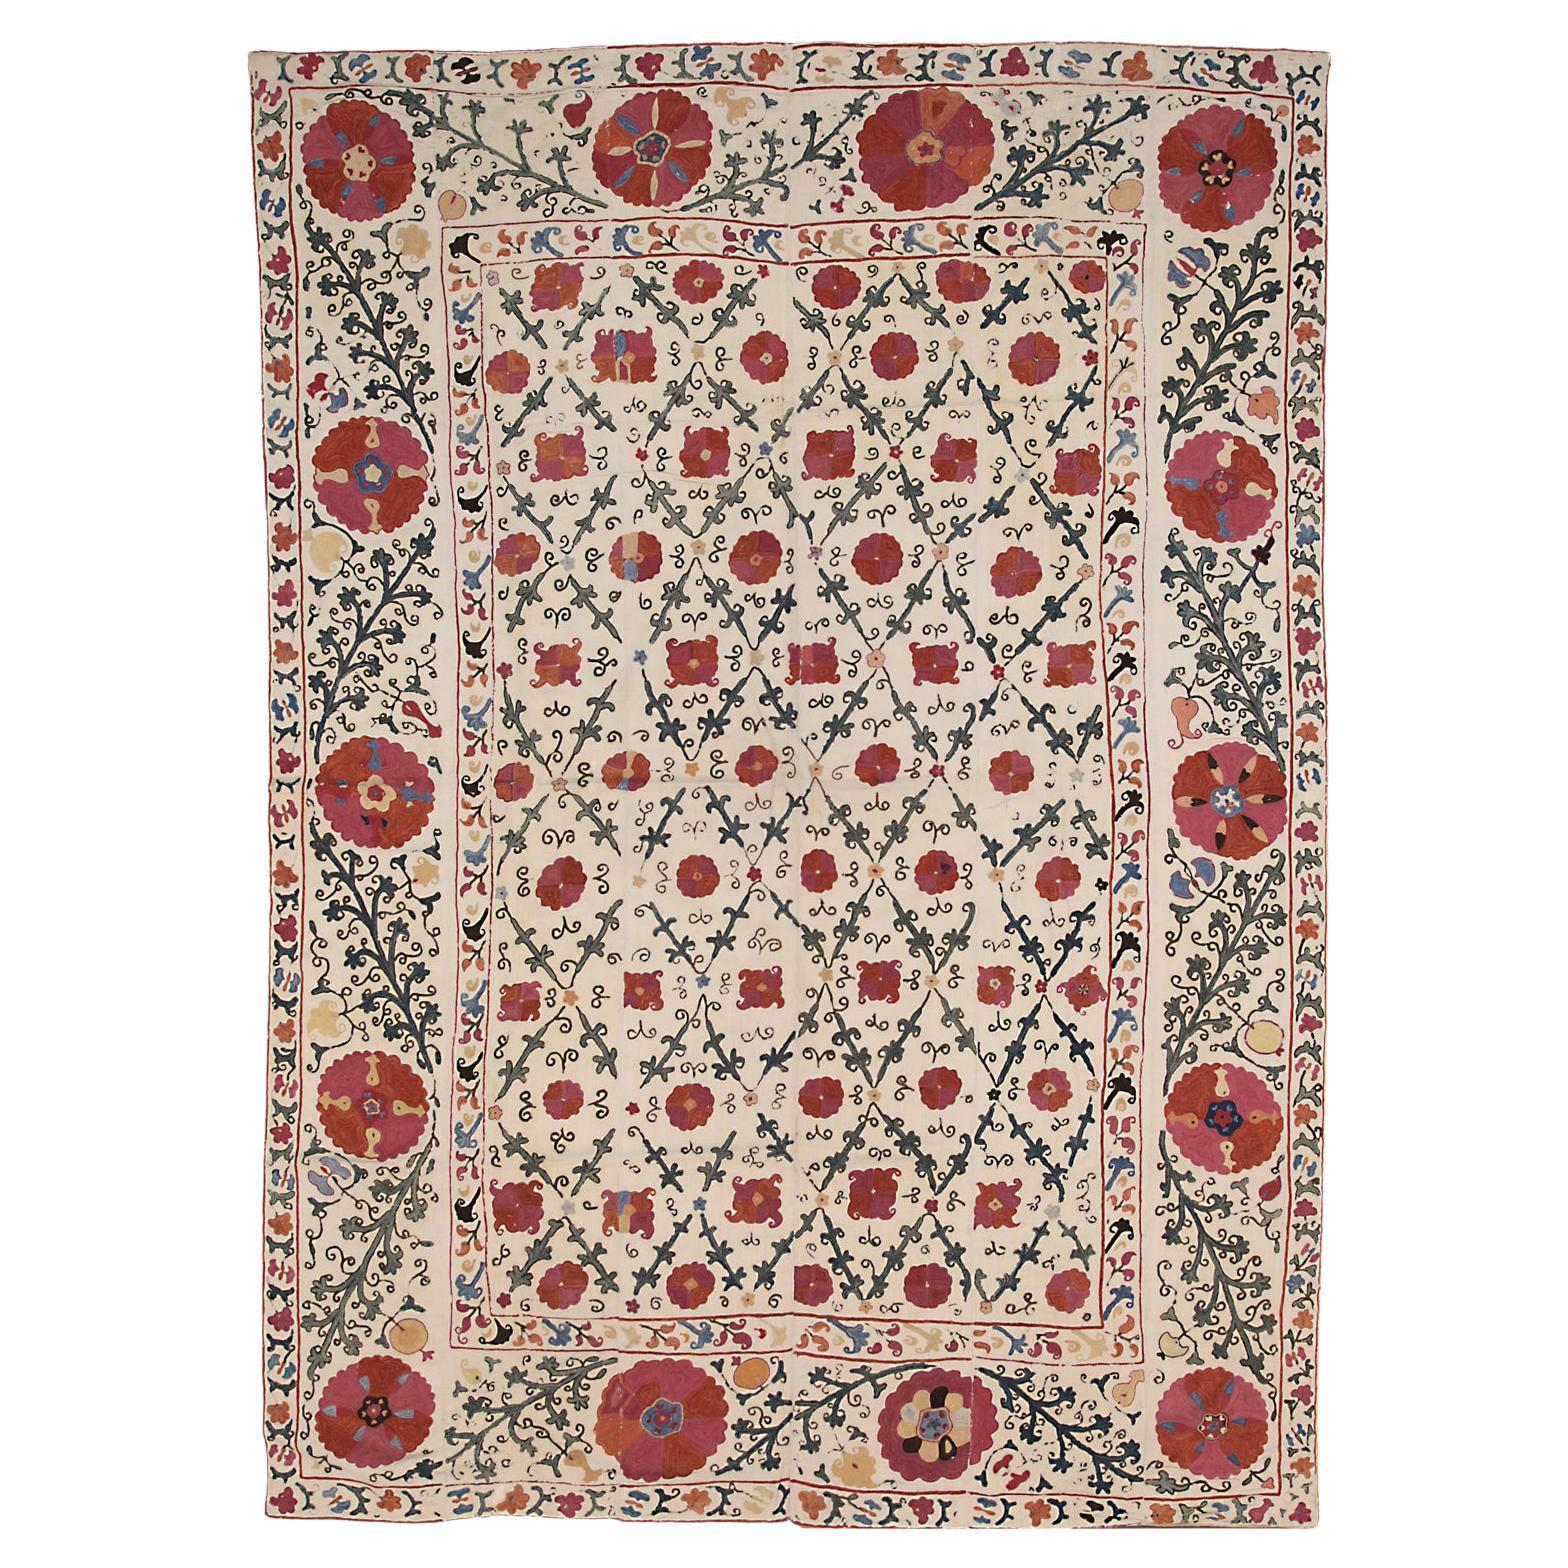 Antique Uzbek Suzani Textile, 19th Century